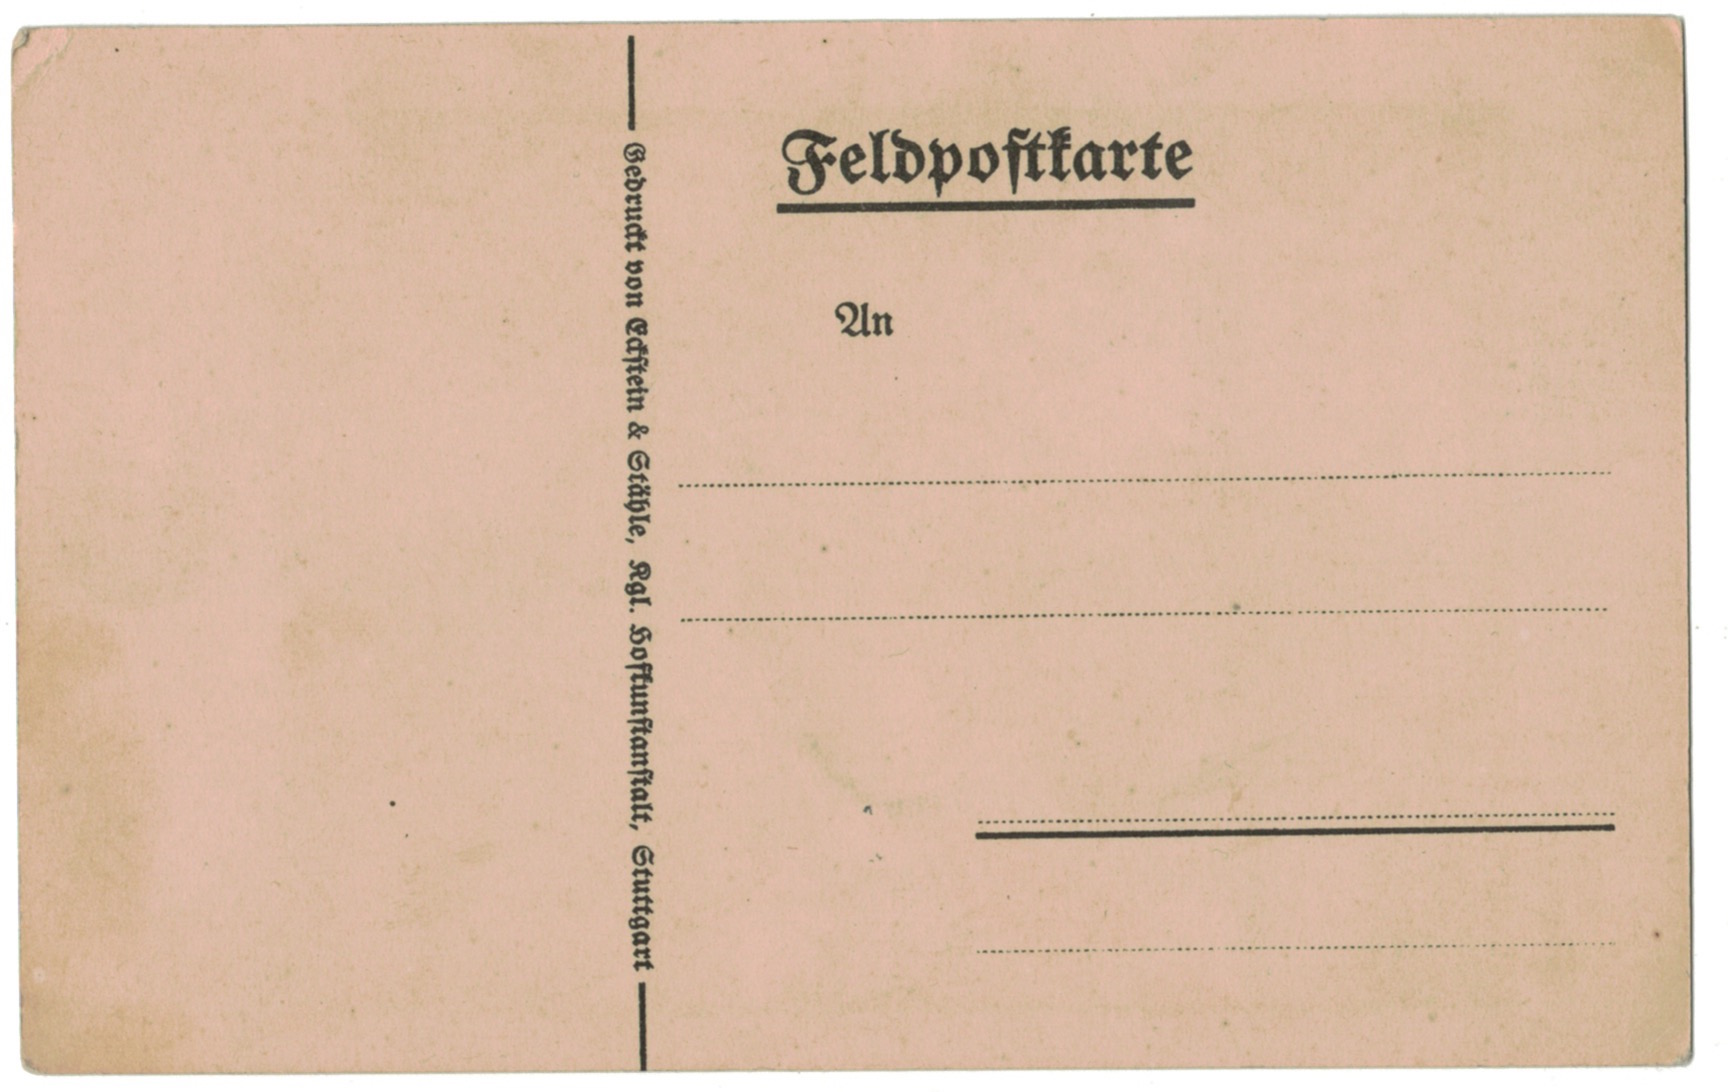 Carte Postale Allemande Lithographie - iconographie 14/18 - Helft uns Siegen ! - Fritz Erler